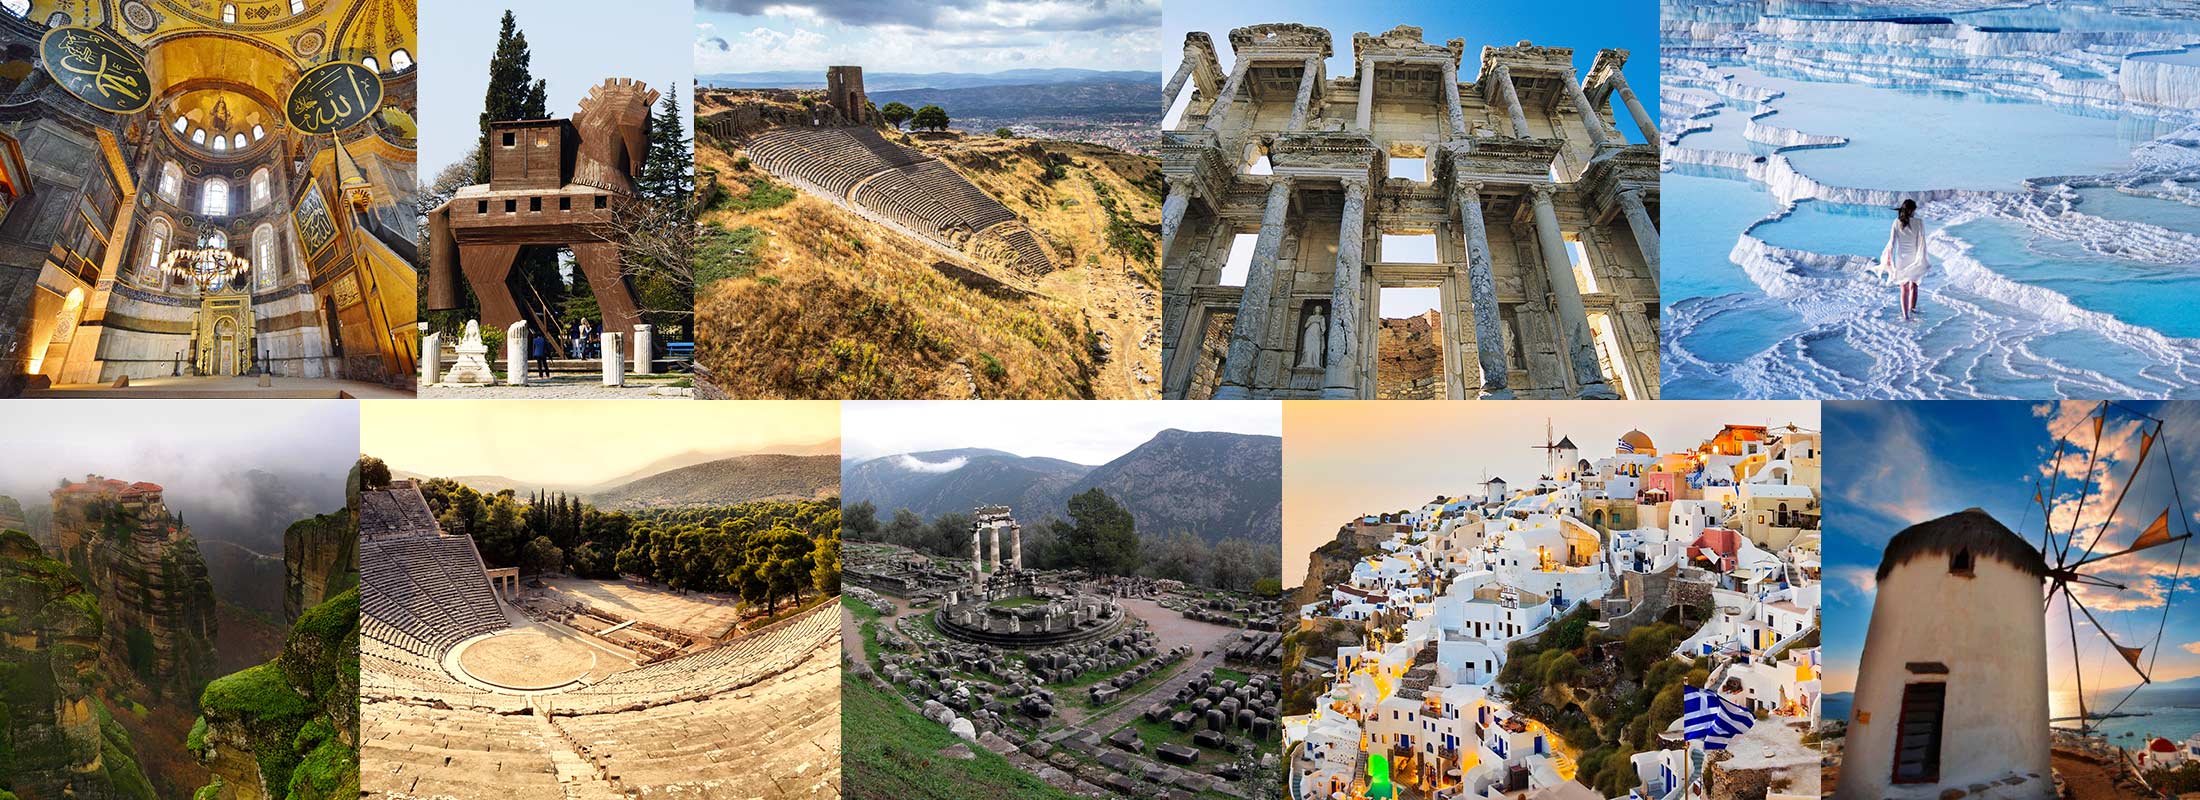 istanbul-troy-pergamon-ephesus-sirince-pamukkale-hierapolis-athens-meteora-delphi-mykonos-santorini-greece-turkey-package-tours